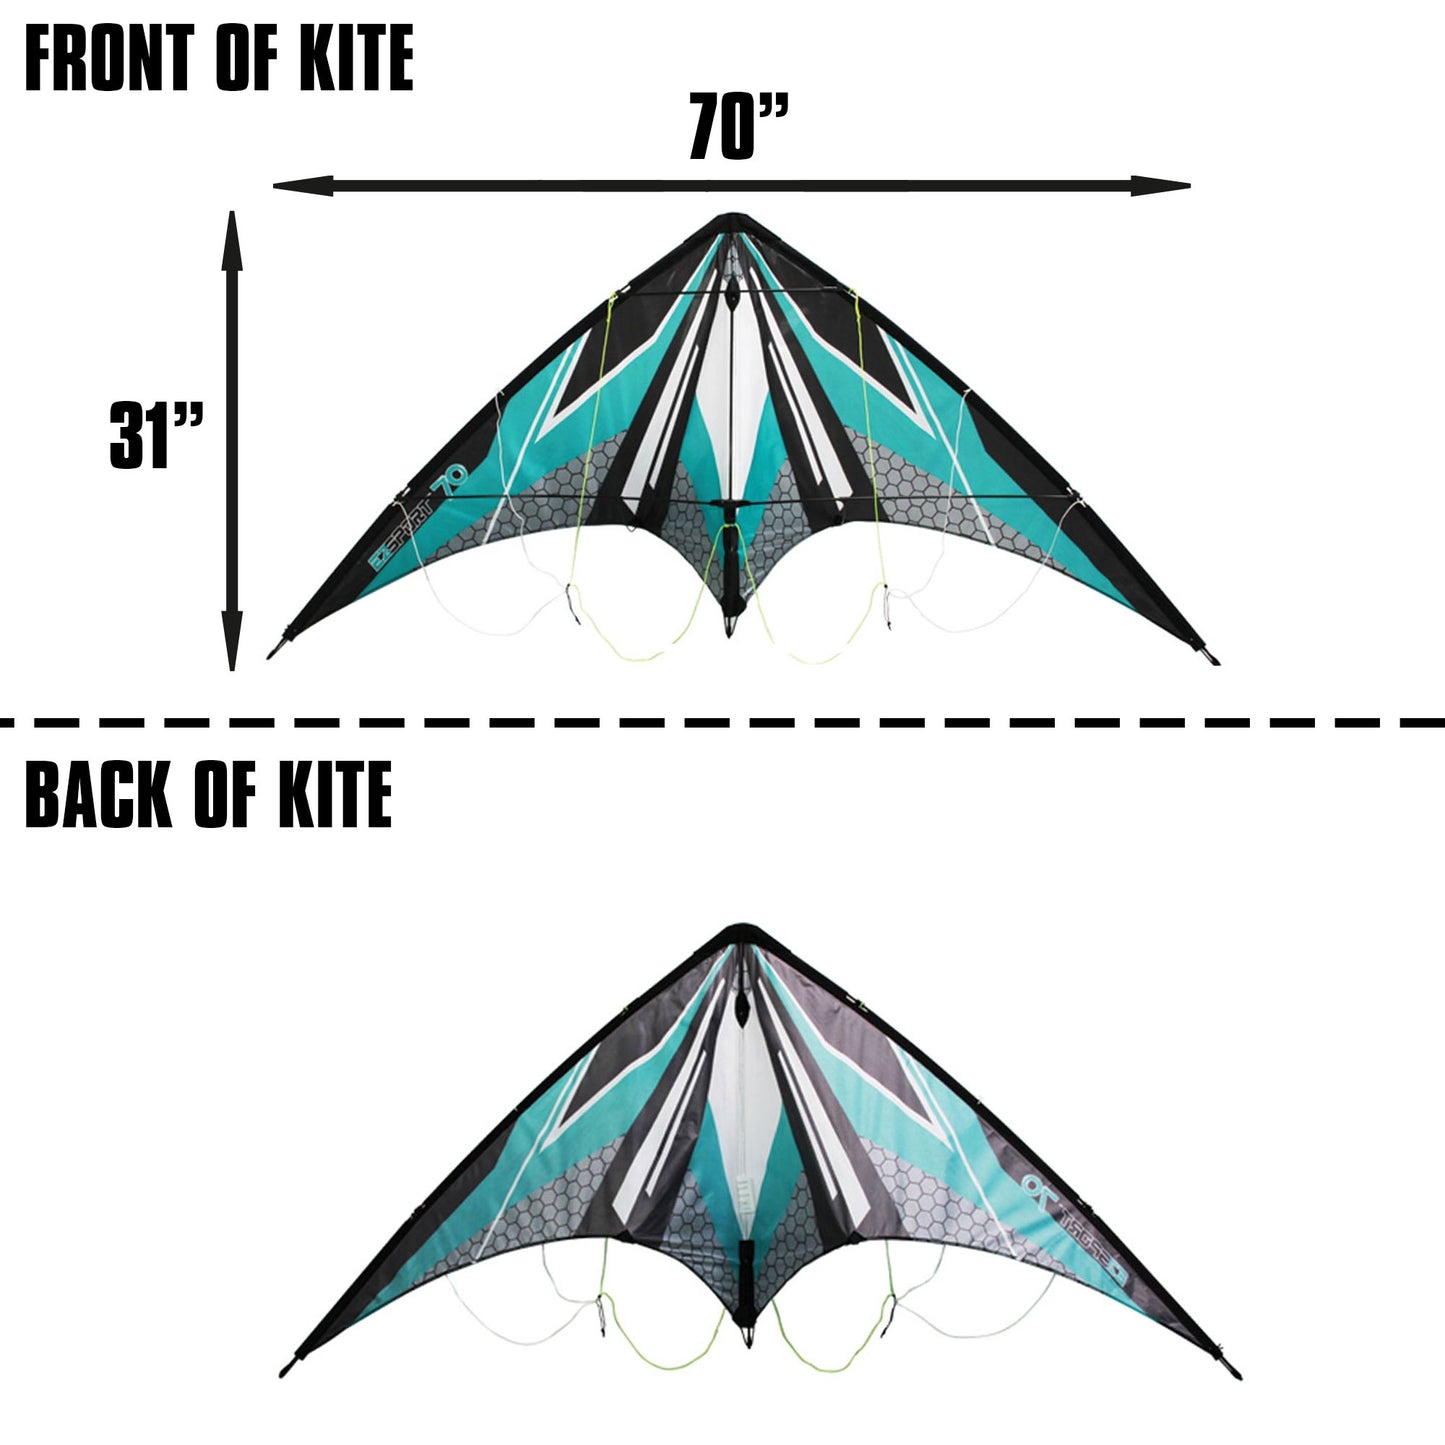 WindNSun EZ Sport 70 Dual Control Sport Kite Teal Hexagon Nylon Kite dimensions